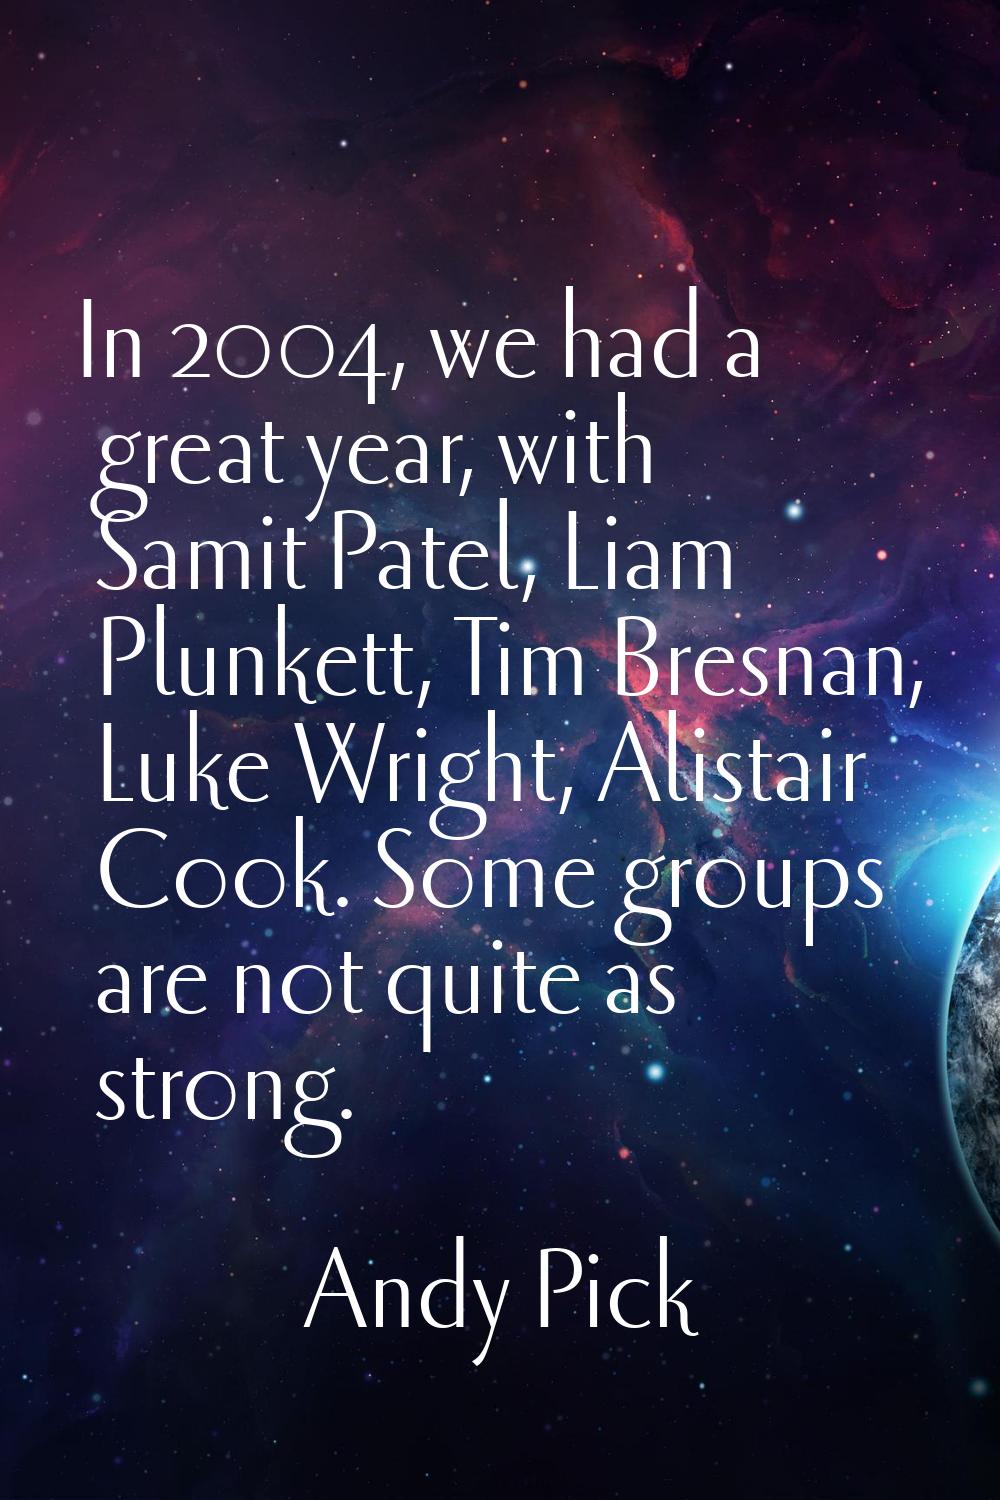 In 2004, we had a great year, with Samit Patel, Liam Plunkett, Tim Bresnan, Luke Wright, Alistair C